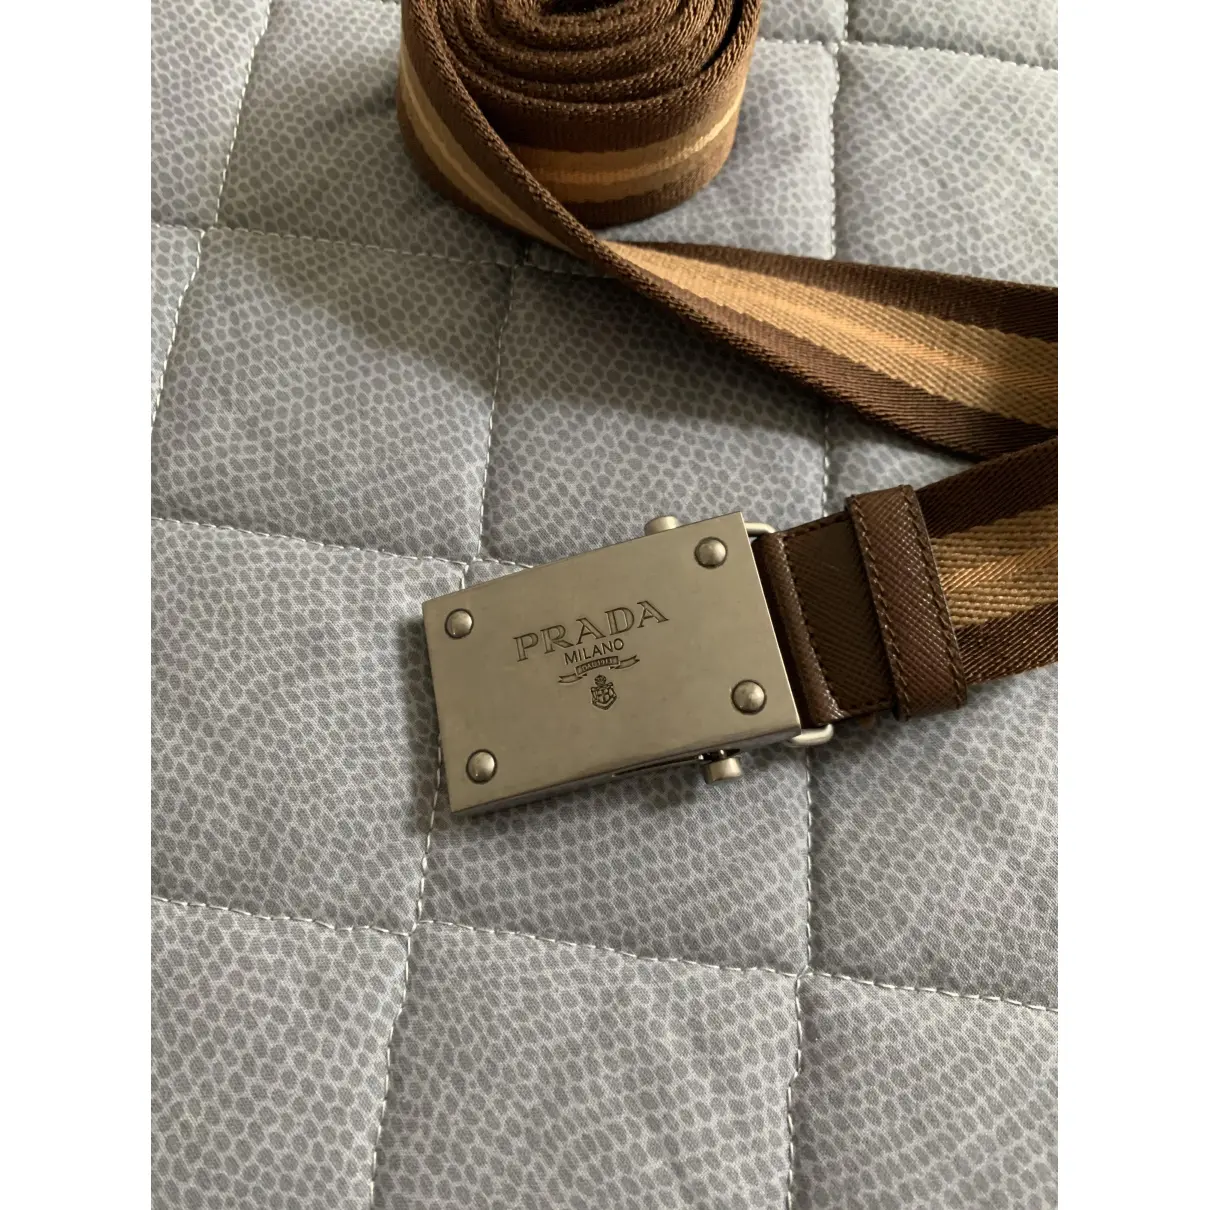 Buy Prada Cloth belt online - Vintage